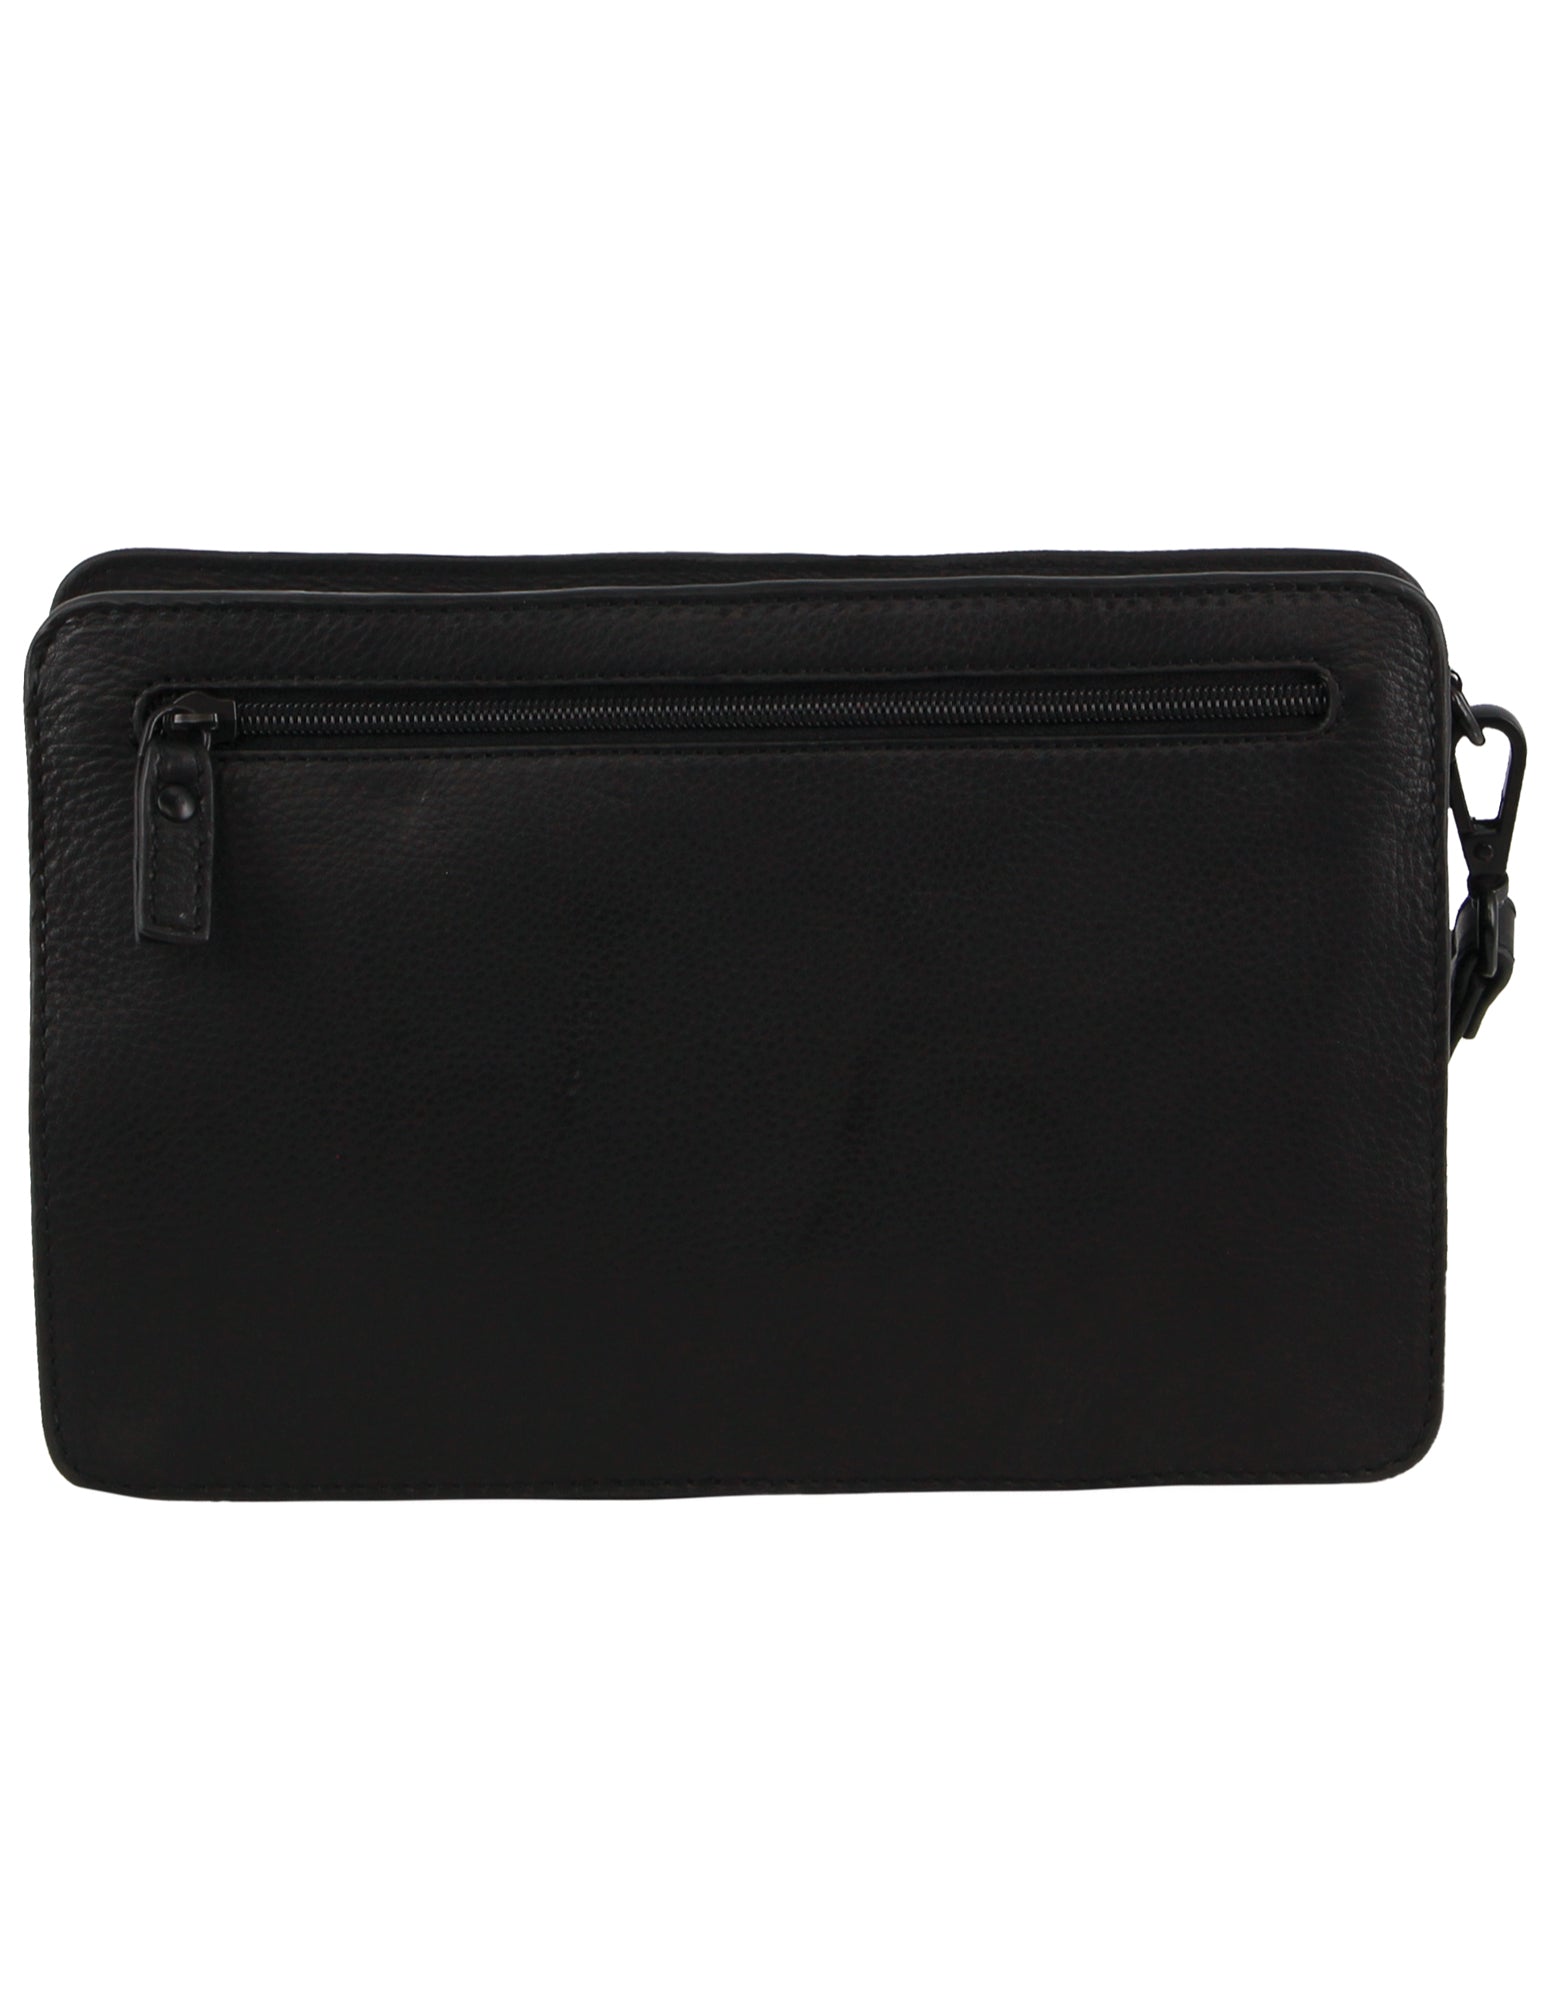 Pierre Cardin Leather Men's Multi Compartment Organiser Bag in Black